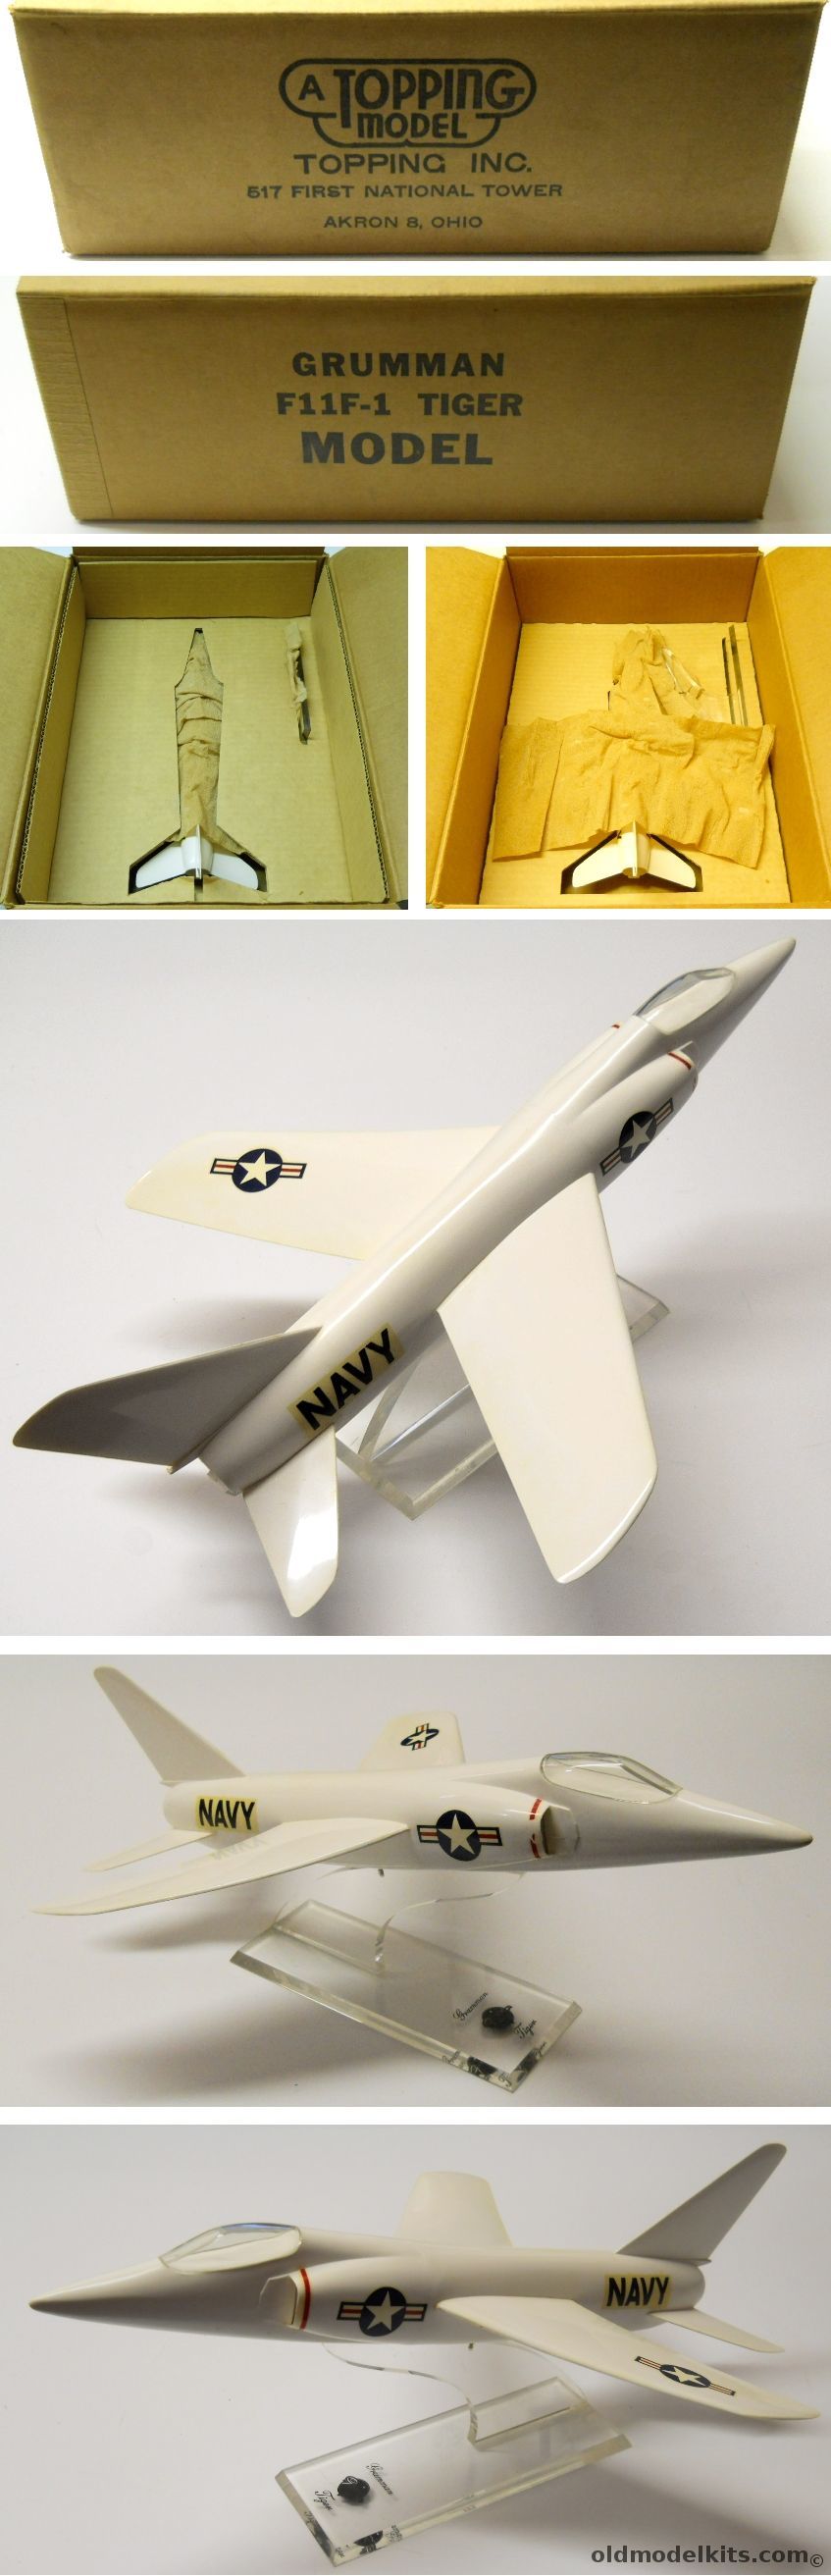 Topping Grumman F11F-1 Tiger - Factory Desktop Model In The Original Topping Box plastic model kit